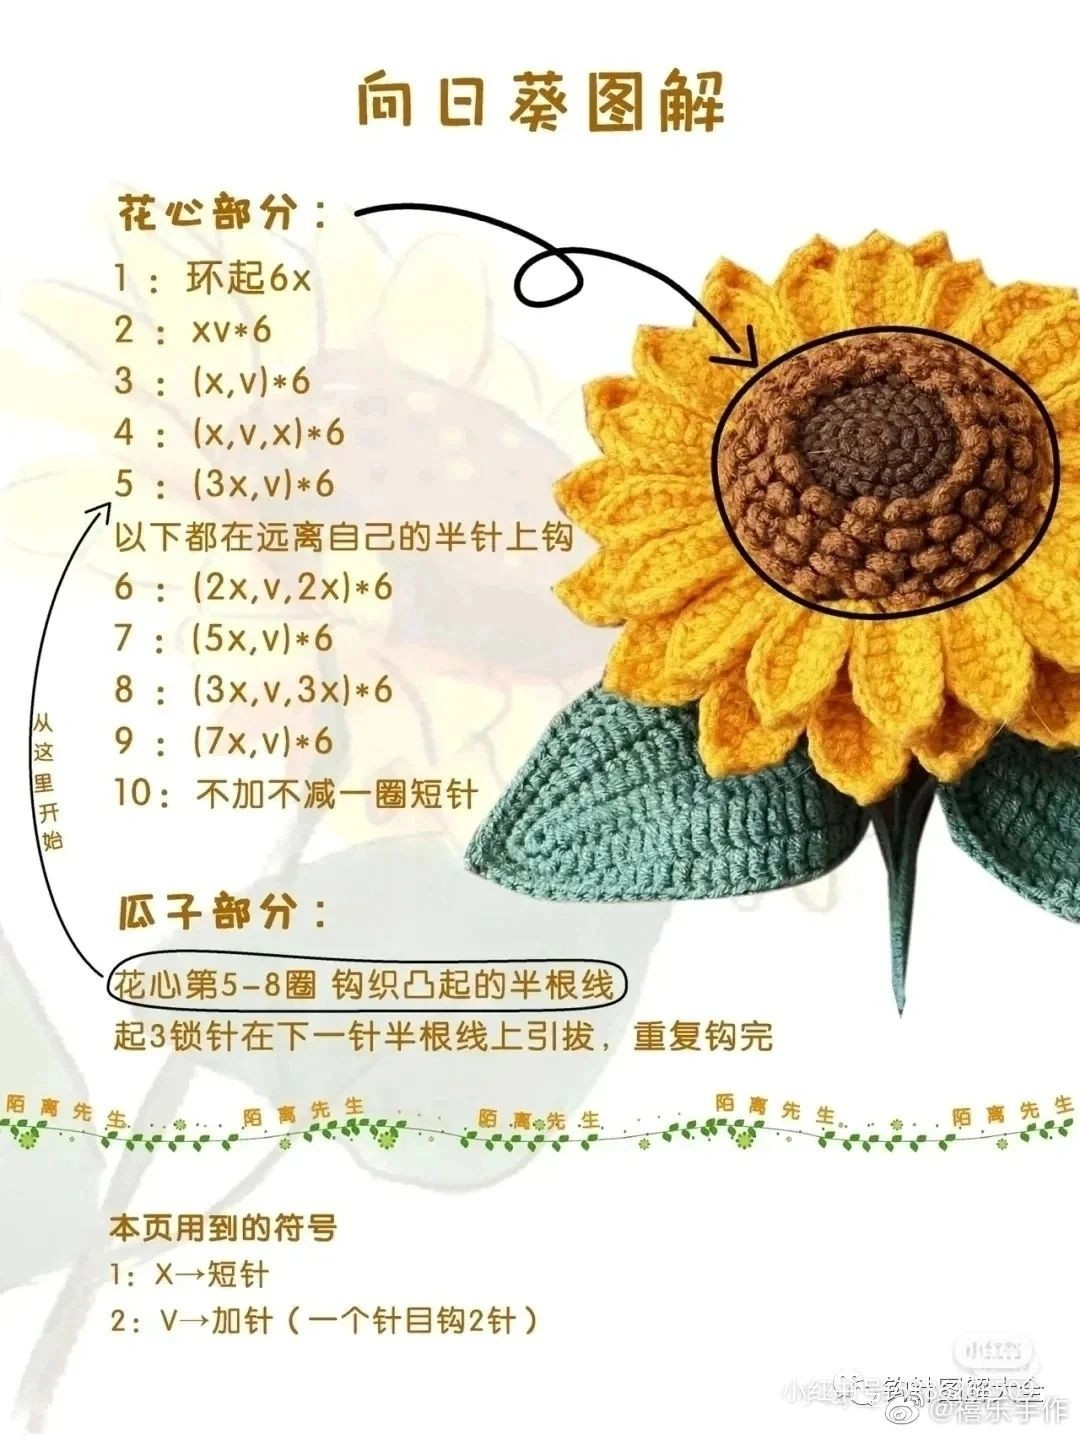 Sunflower keychain, yellow petals, brown pistil, crochet pattern